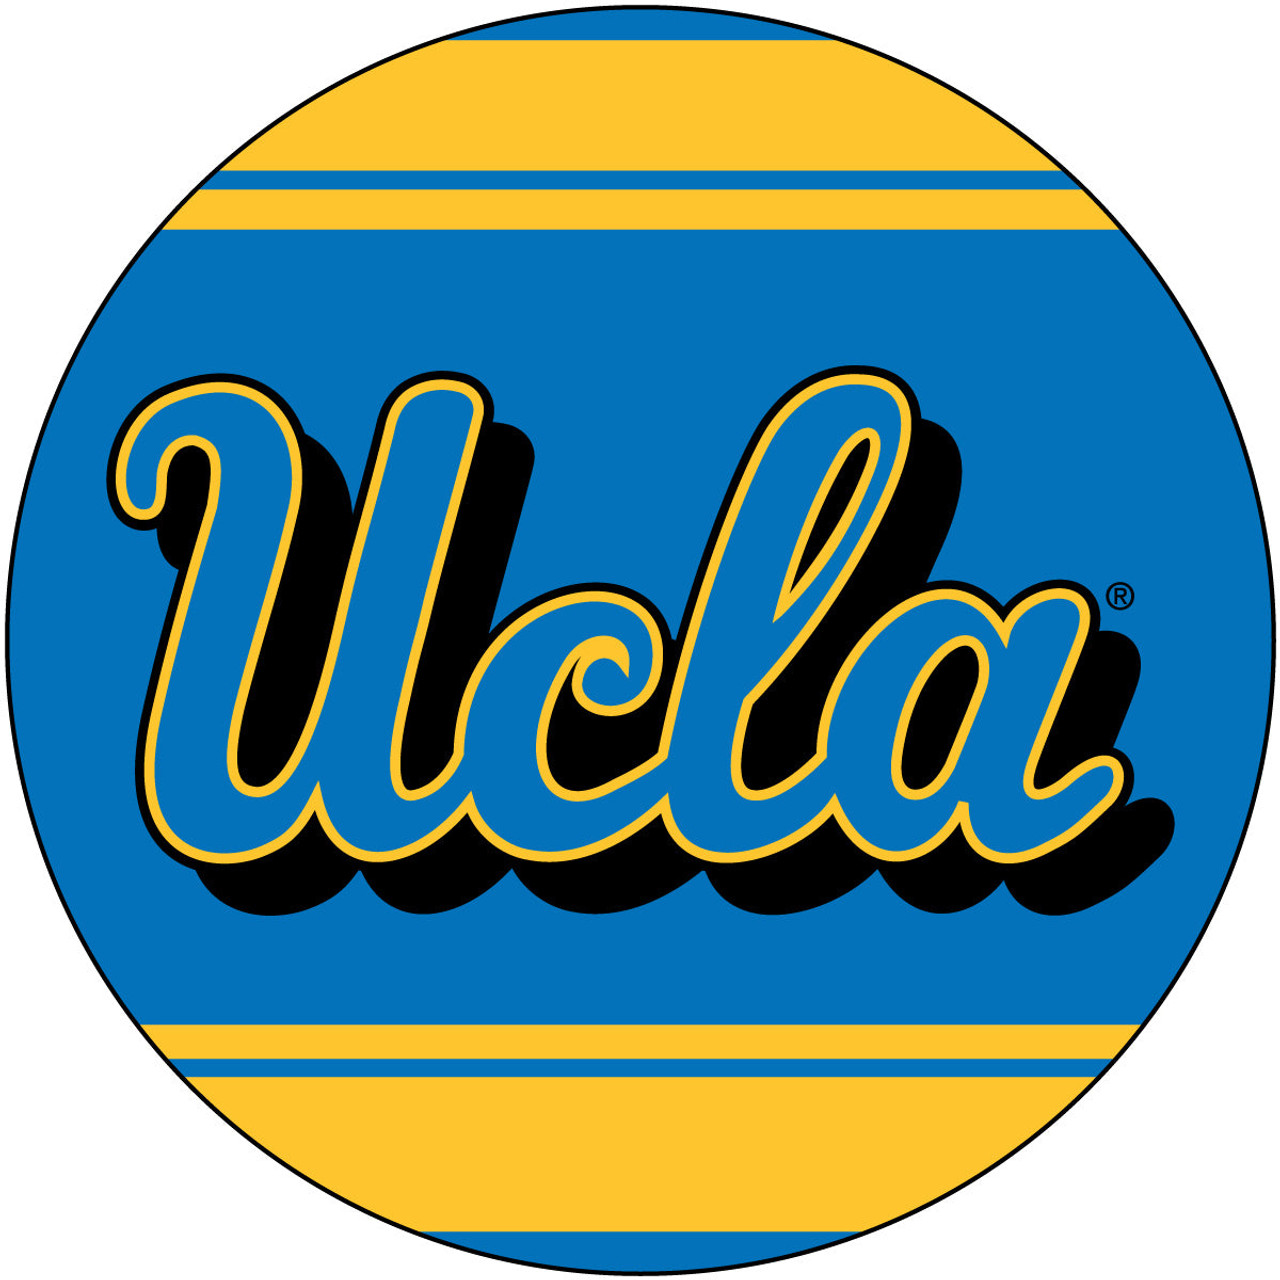 University of California Los Angeles 4 Inch Round Trendy Polka Dot Magnet